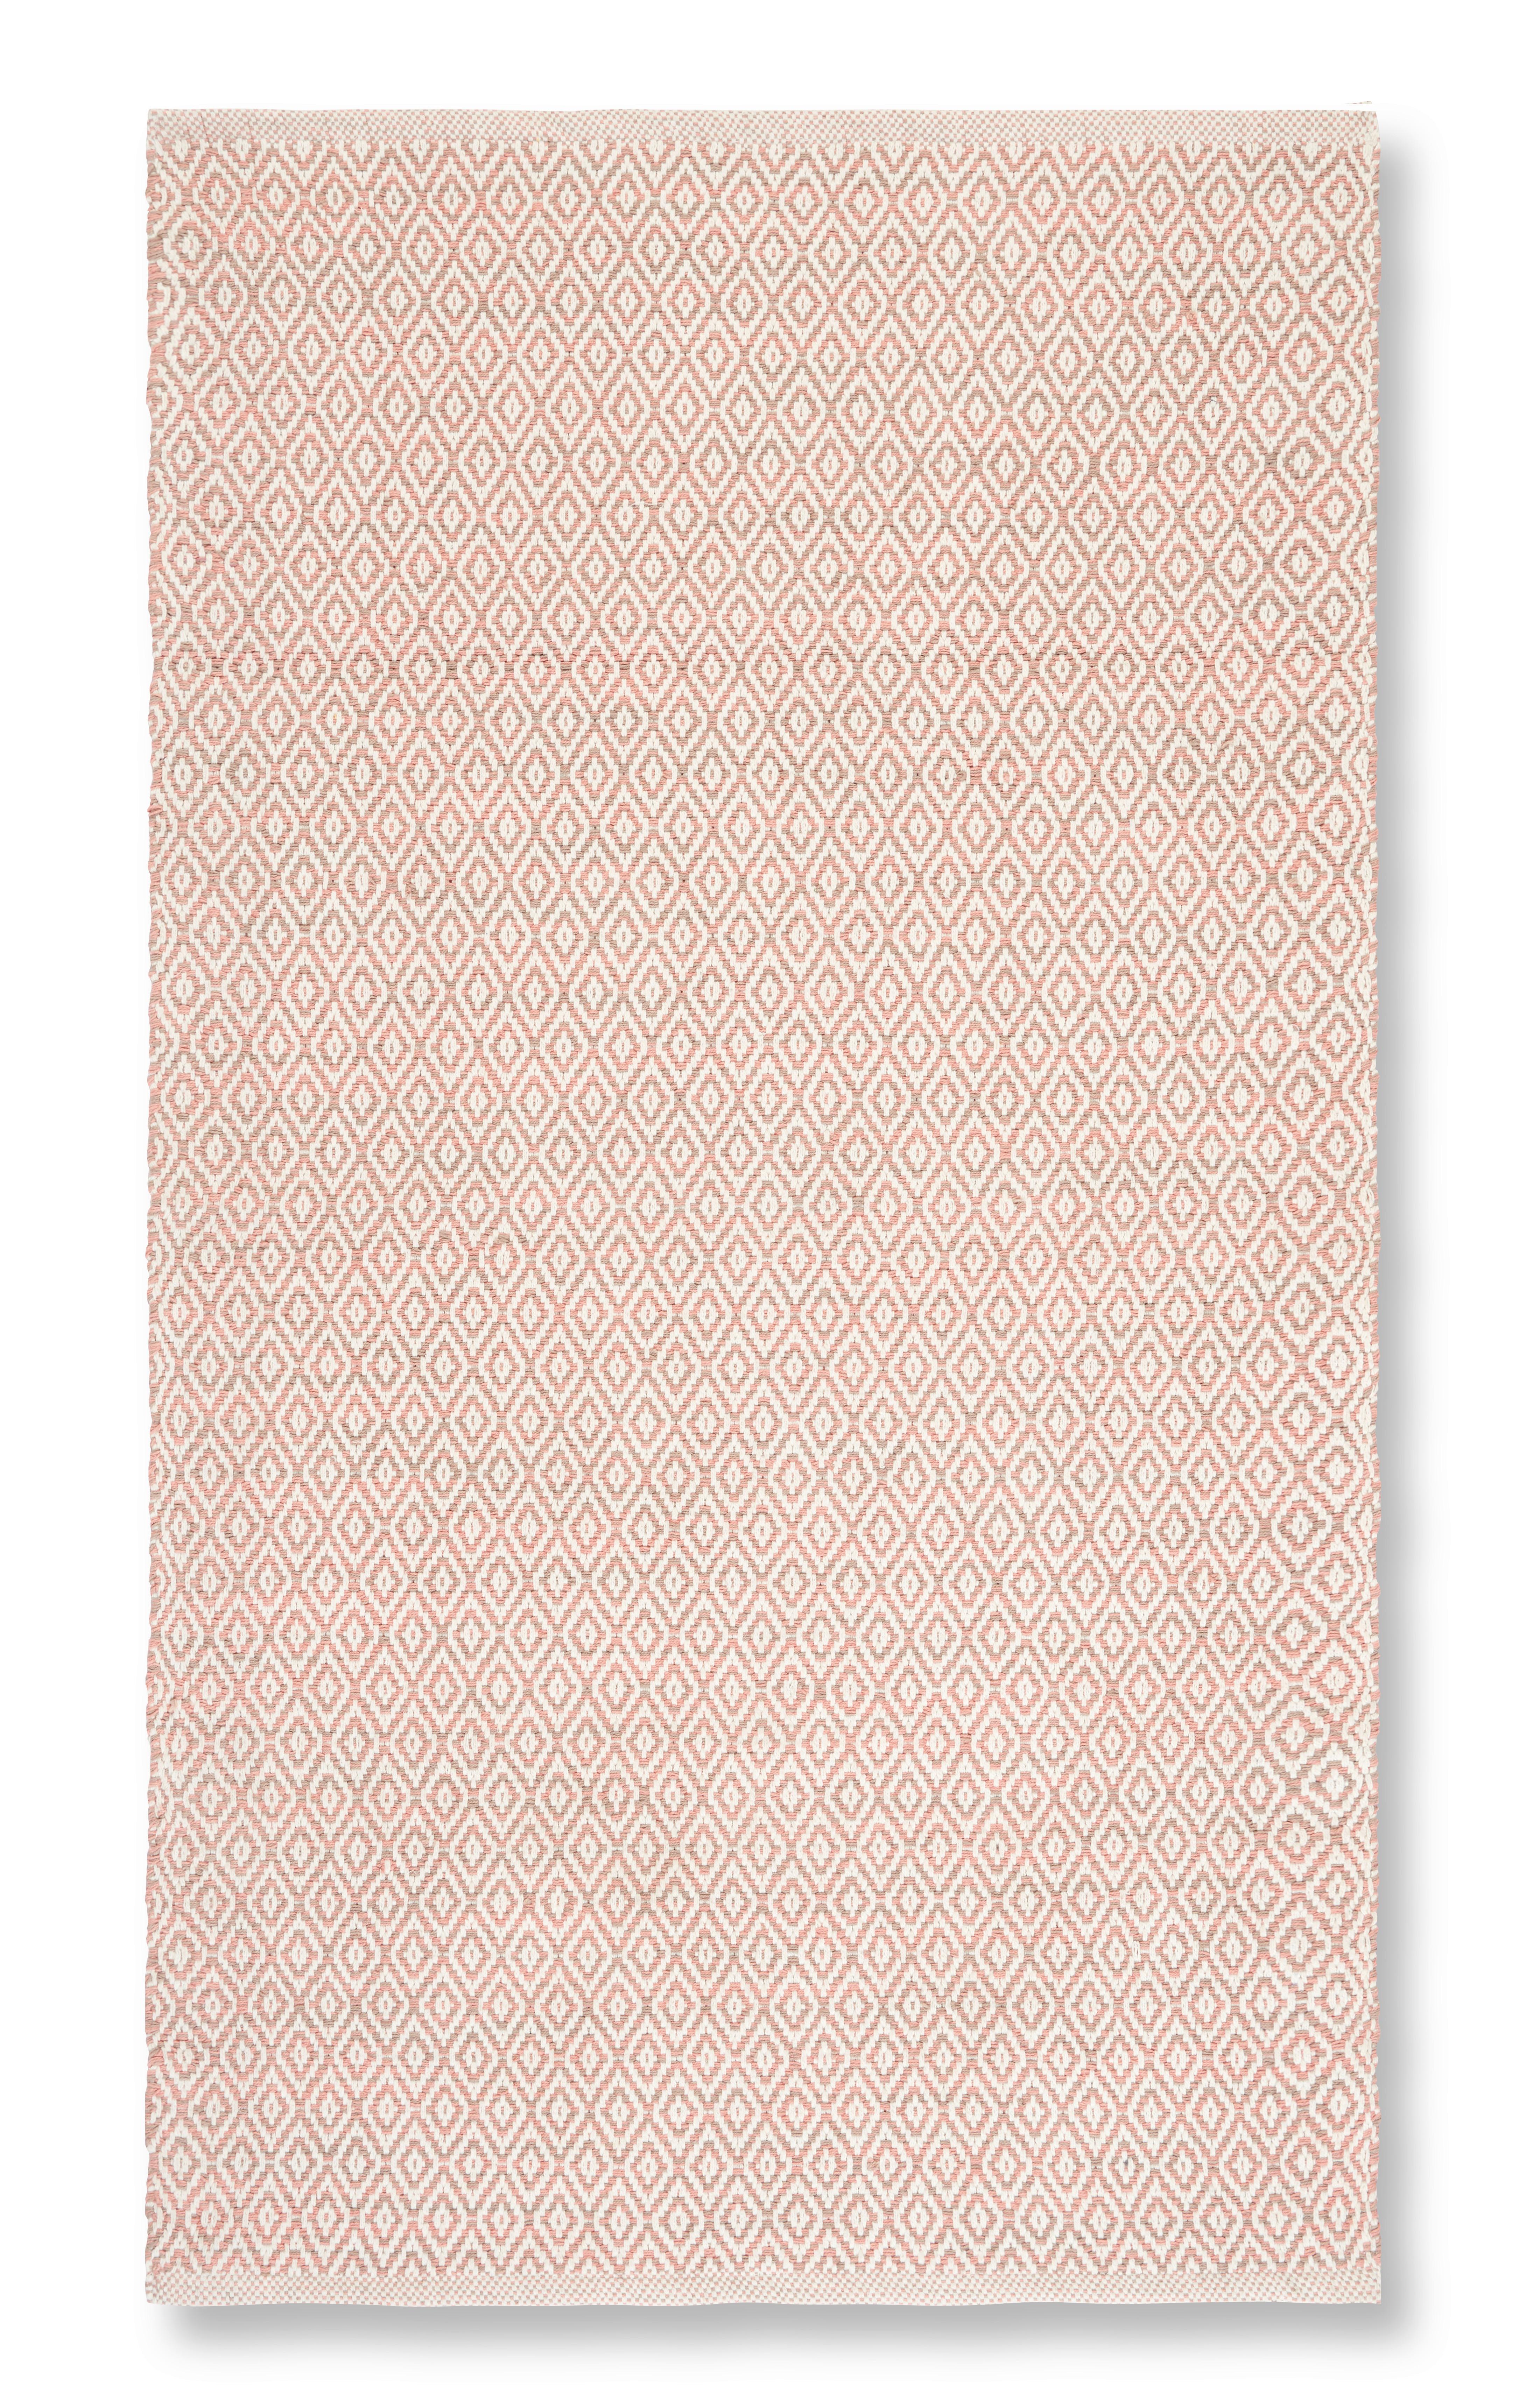 Handwebeteppich Carola 1 in Rosa ca. 60x120cm - Rosa, Basics, Textil (60/120cm) - Modern Living